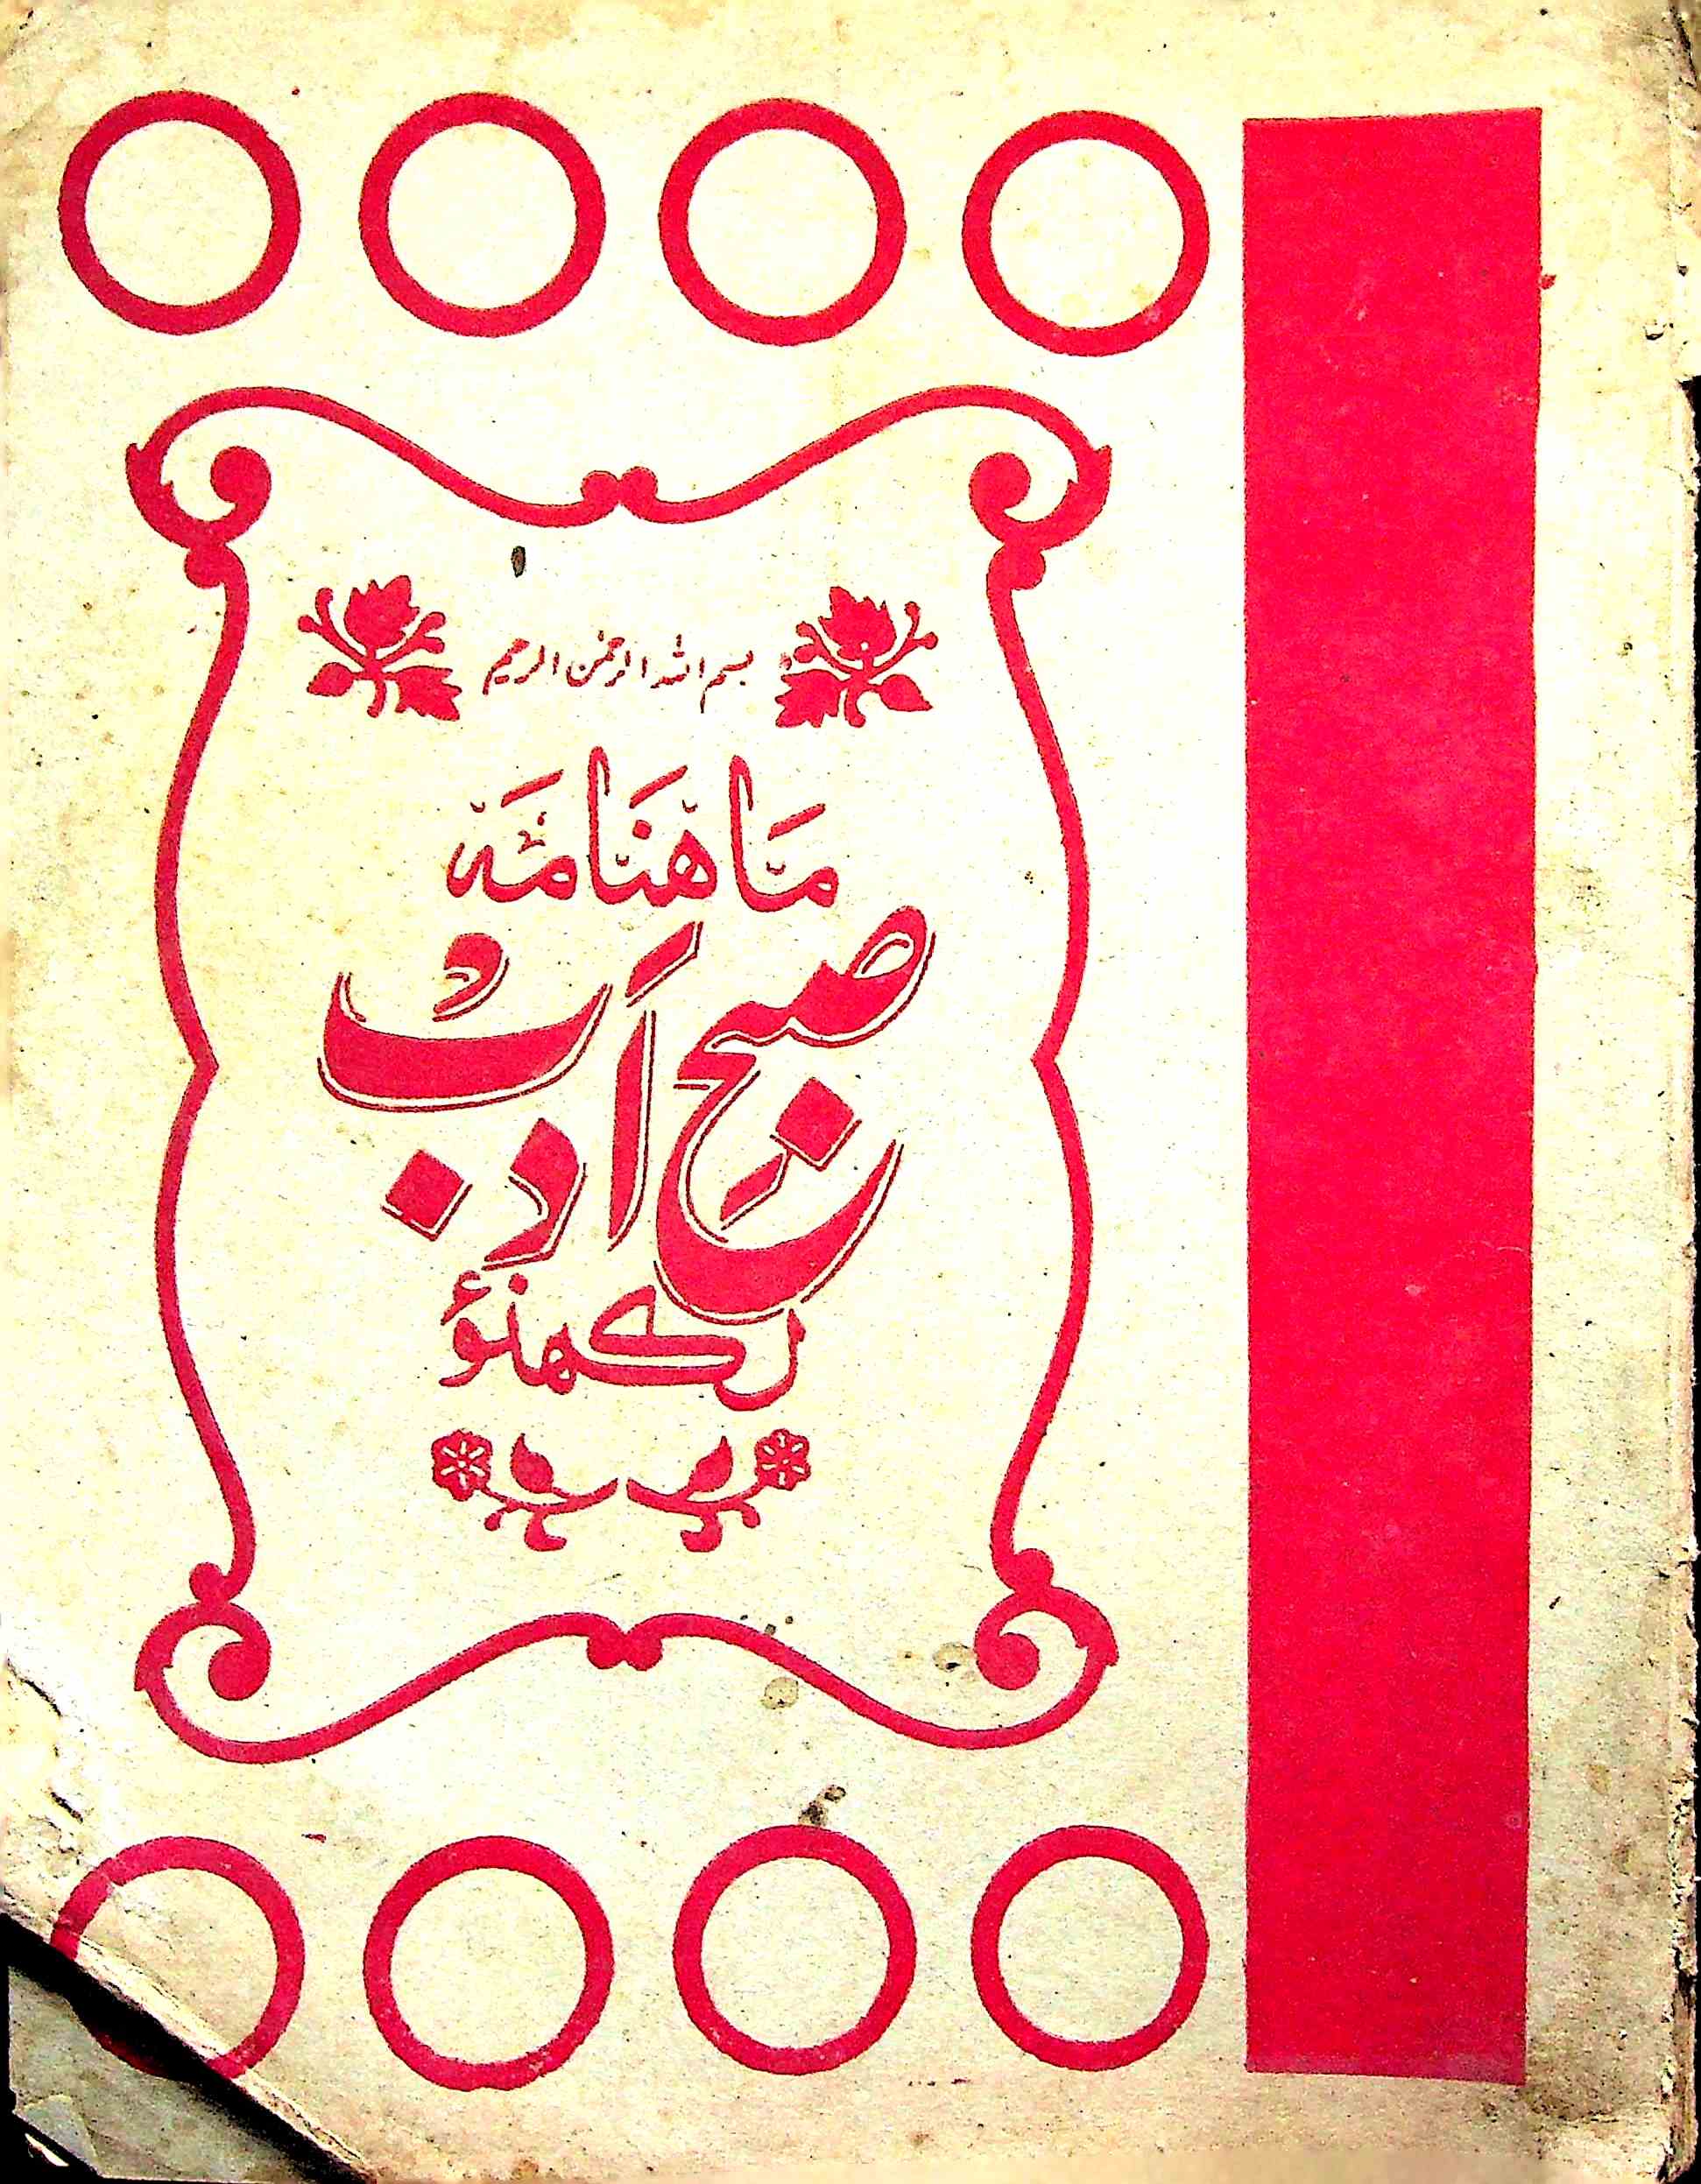 Subha Adab Shumara 17 March 1976